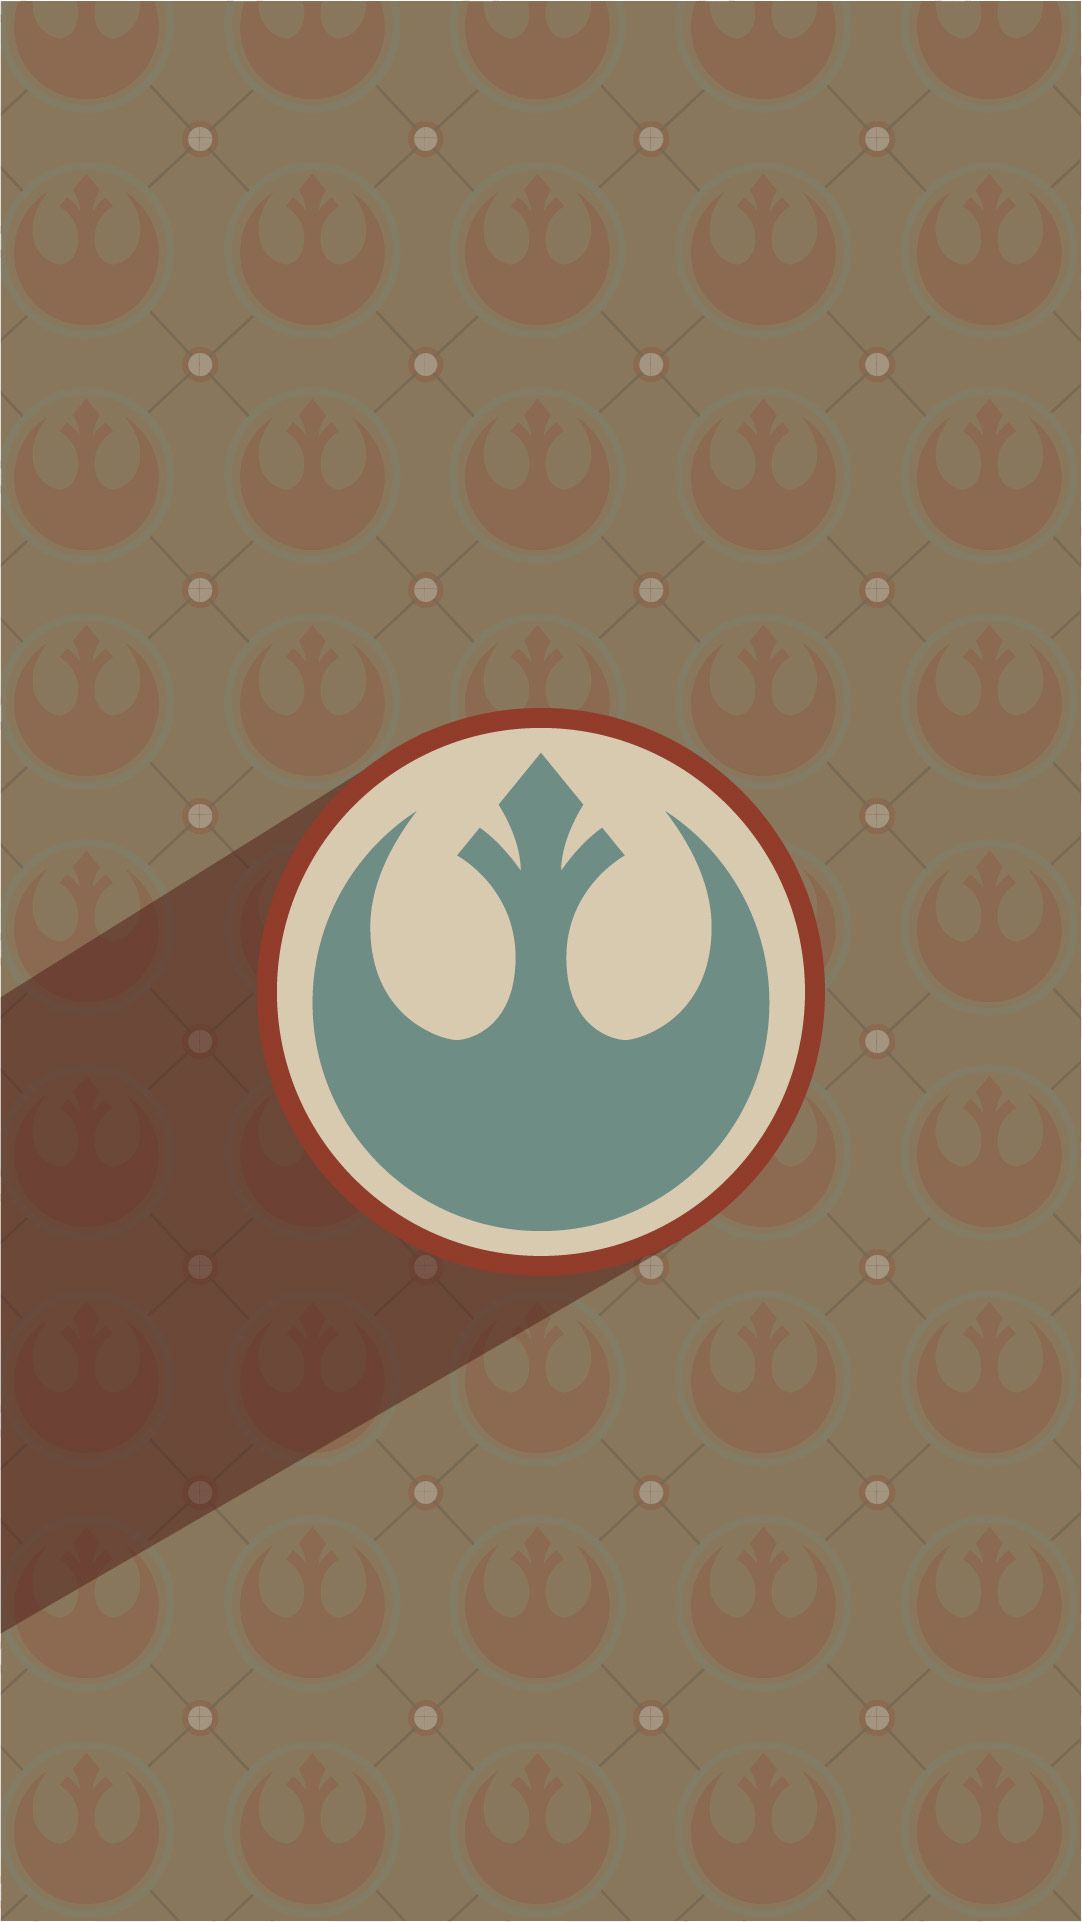 Rebel Star Wars iPhone Wallpaper Free Rebel Star Wars iPhone Background